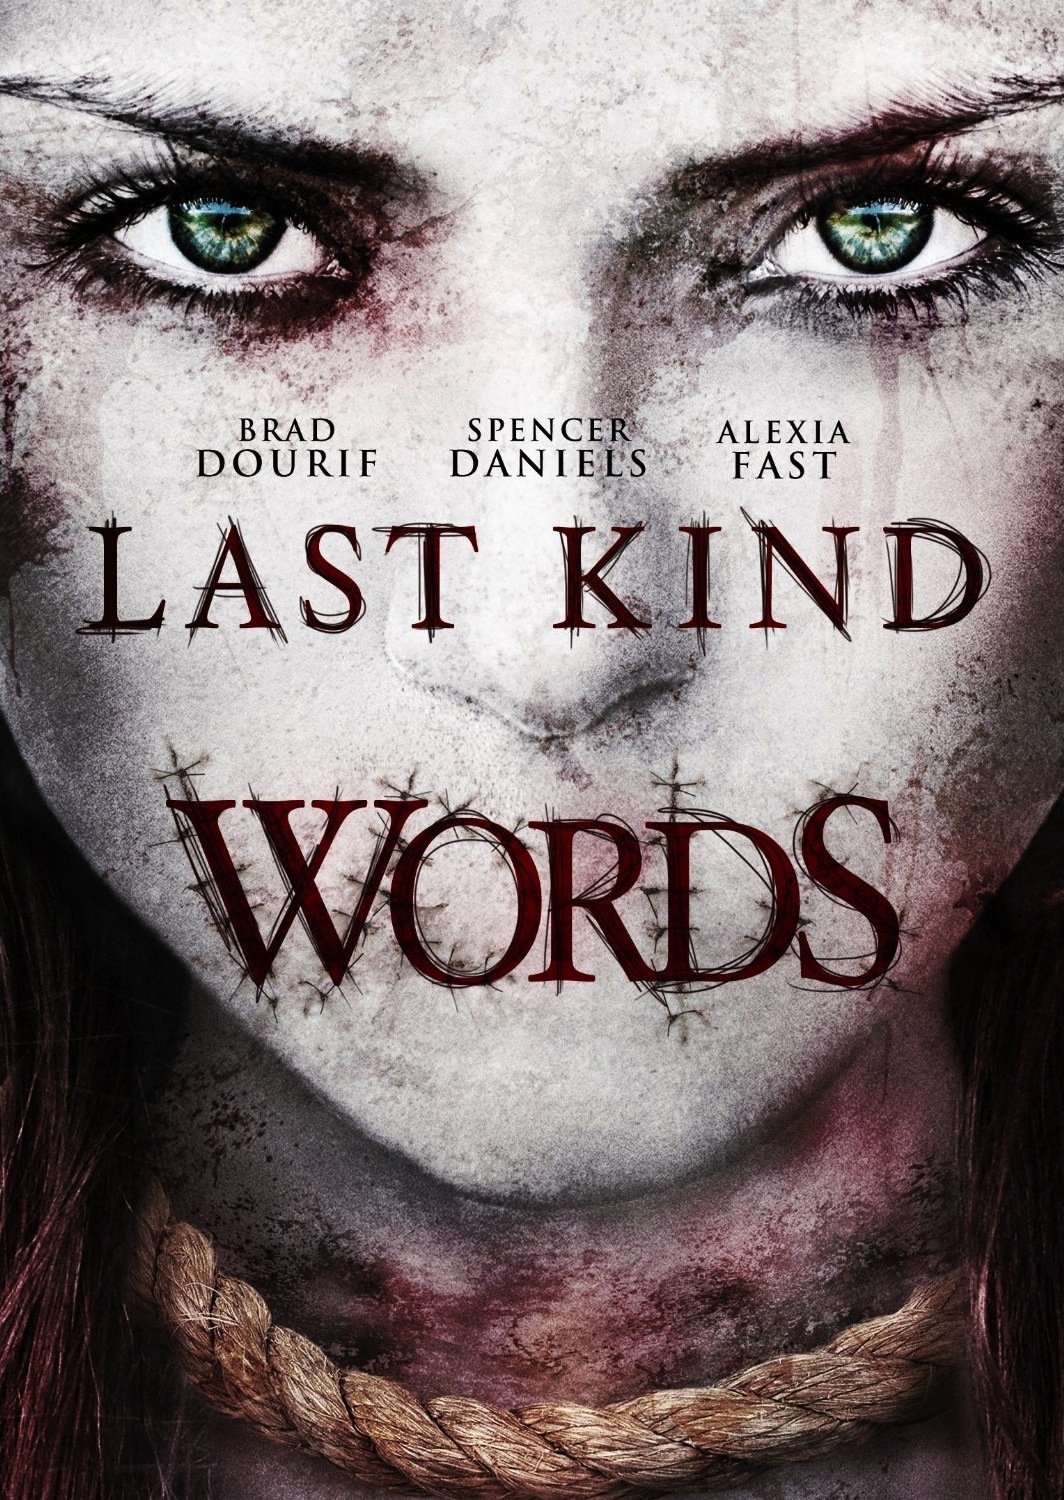 Nonton film Last Kind Words layarkaca21 indoxx1 ganool online streaming terbaru